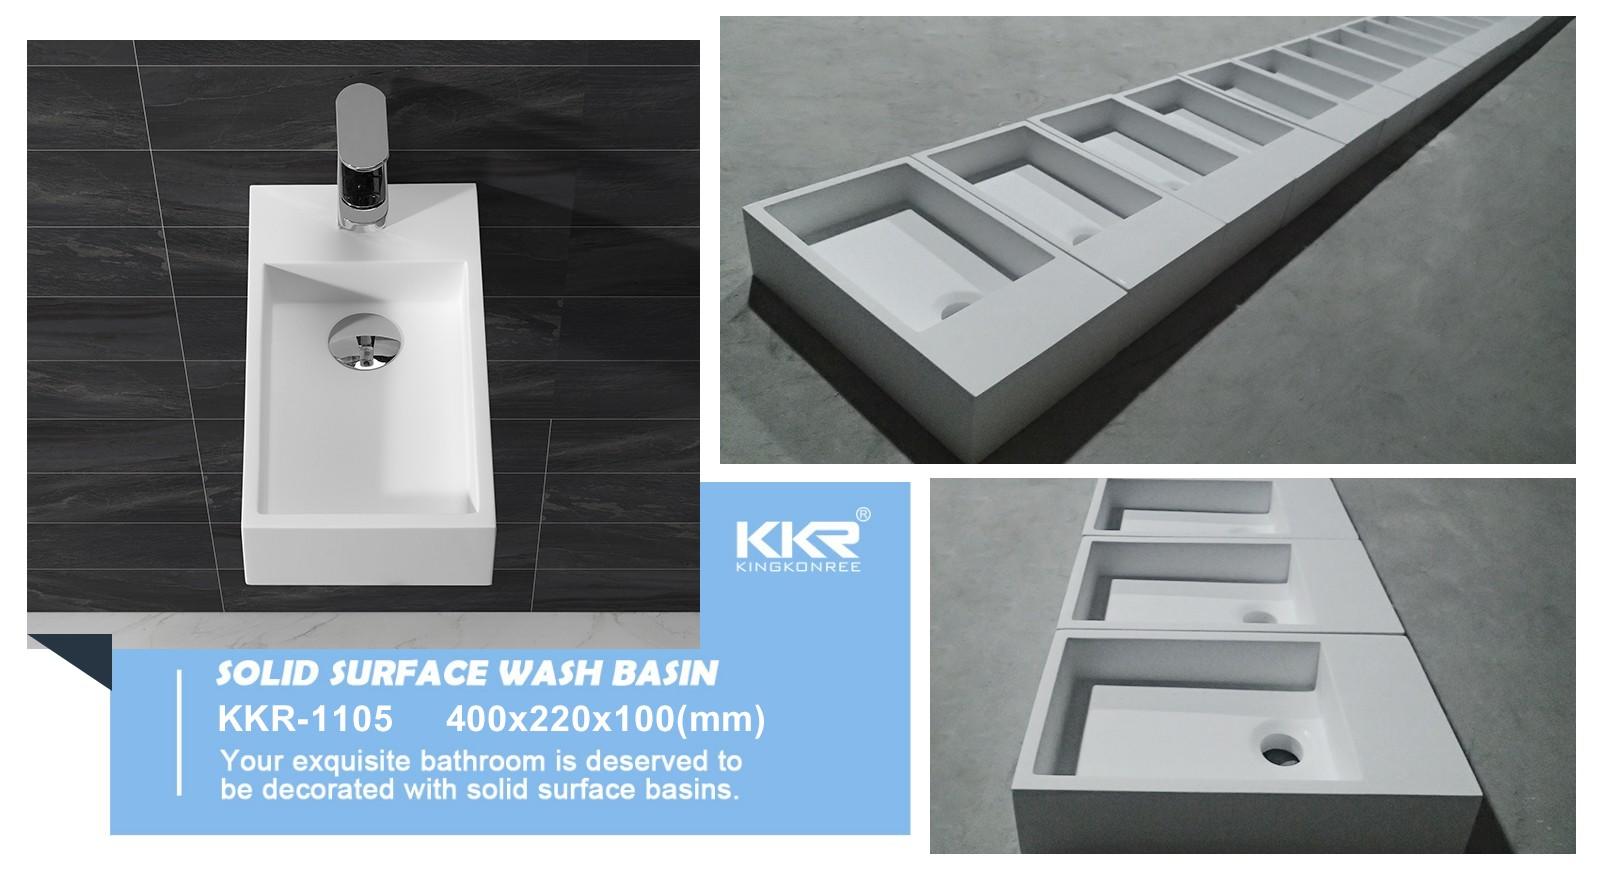 kkr wall mounted bathroom basin acrylic artificial KingKonree Brand